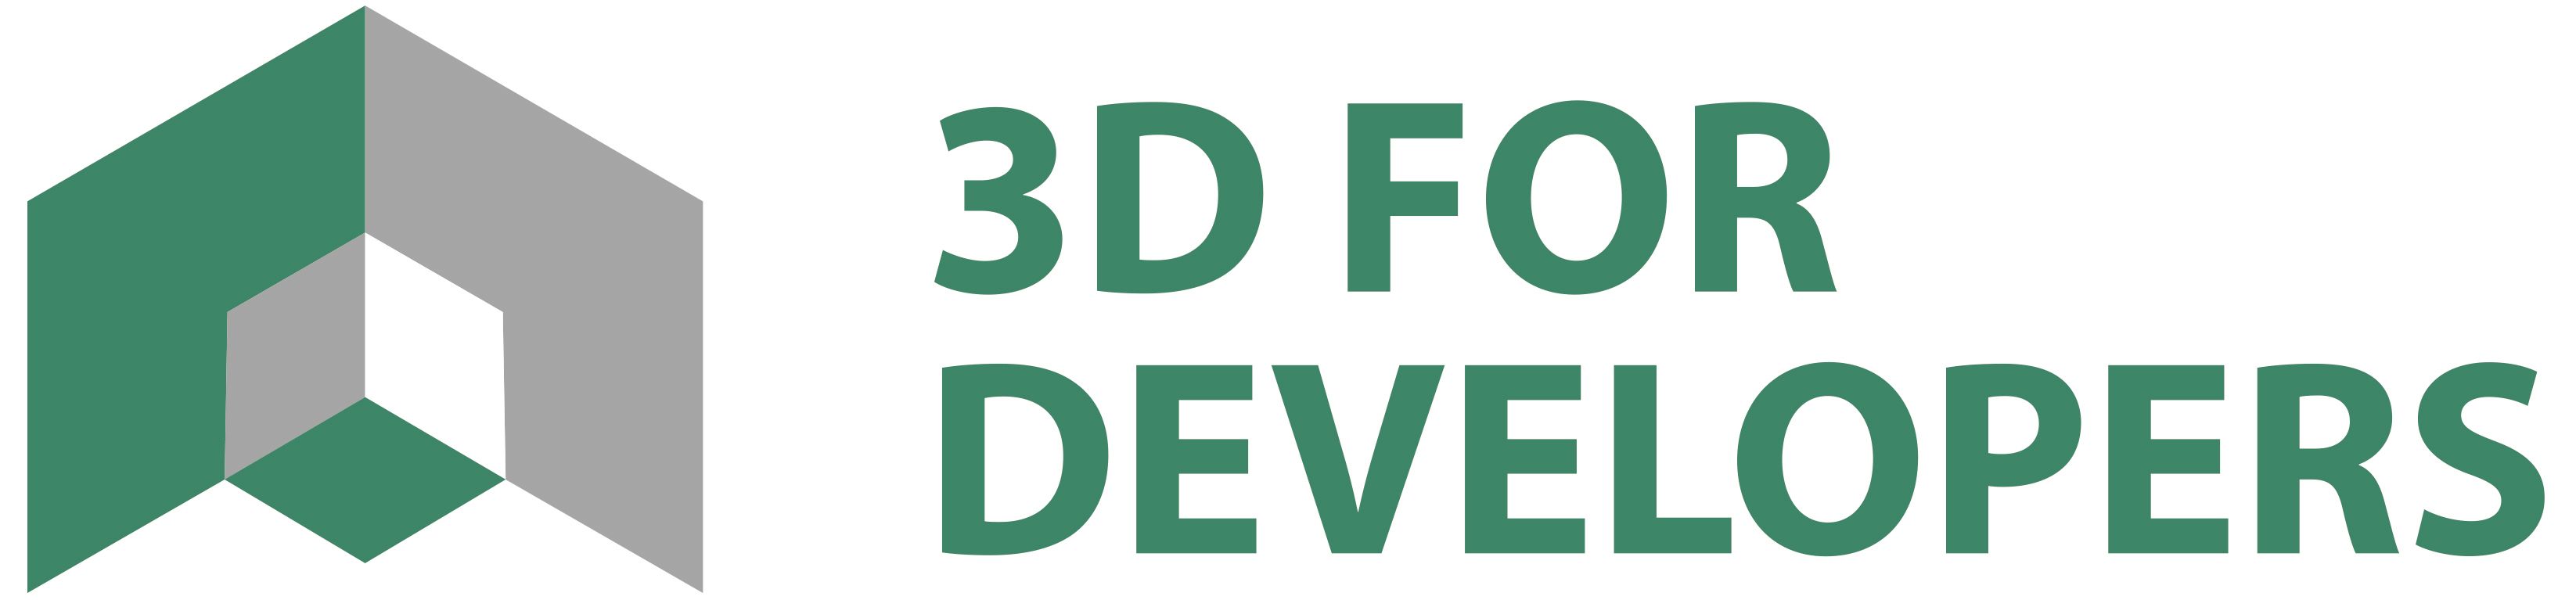 3D for Developers